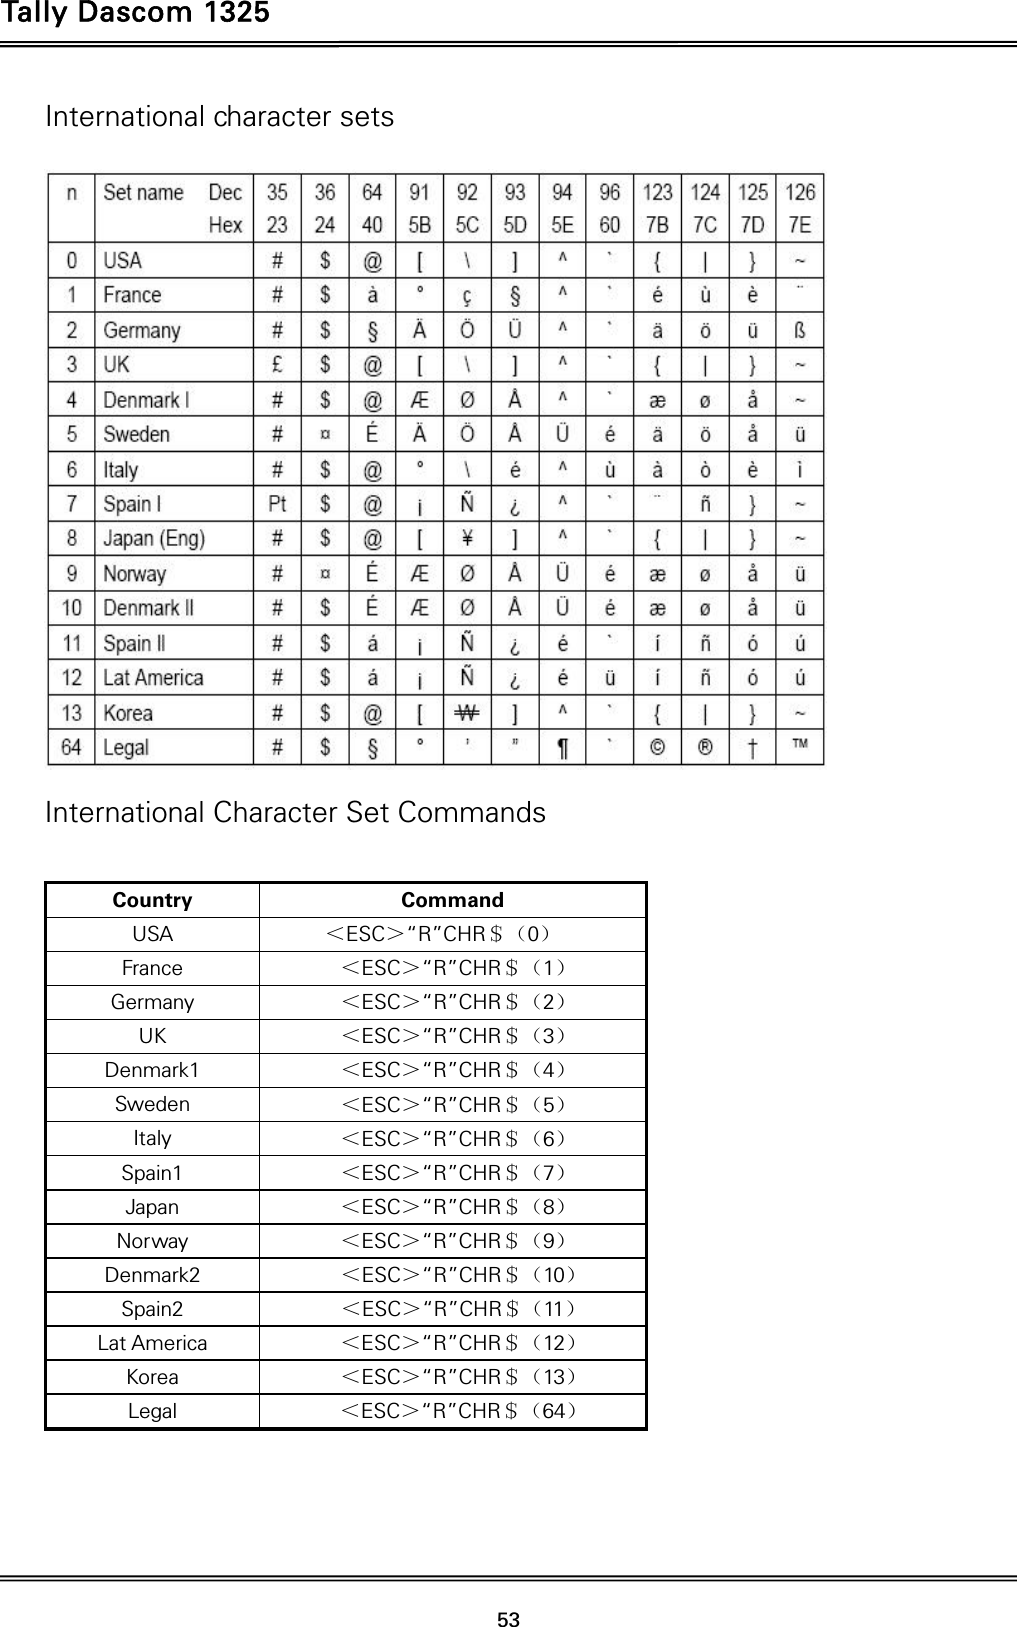 Tally Dascom 1325   53  International character sets     International Character Set Commands  Country Command USA  ＜ESC＞“R”CHR＄（0） France   ＜ESC＞“R”CHR＄（1） Germany   ＜ESC＞“R”CHR＄（2） UK   ＜ESC＞“R”CHR＄（3） Denmark1   ＜ESC＞“R”CHR＄（4） Sweden   ＜ESC＞“R”CHR＄（5） Italy   ＜ESC＞“R”CHR＄（6） Spain1   ＜ESC＞“R”CHR＄（7） Japan   ＜ESC＞“R”CHR＄（8） Norway   ＜ESC＞“R”CHR＄（9） Denmark2    ＜ESC＞“R”CHR＄（10） Spain2    ＜ESC＞“R”CHR＄（11） Lat America    ＜ESC＞“R”CHR＄（12） Korea    ＜ESC＞“R”CHR＄（13） Legal    ＜ESC＞“R”CHR＄（64）    